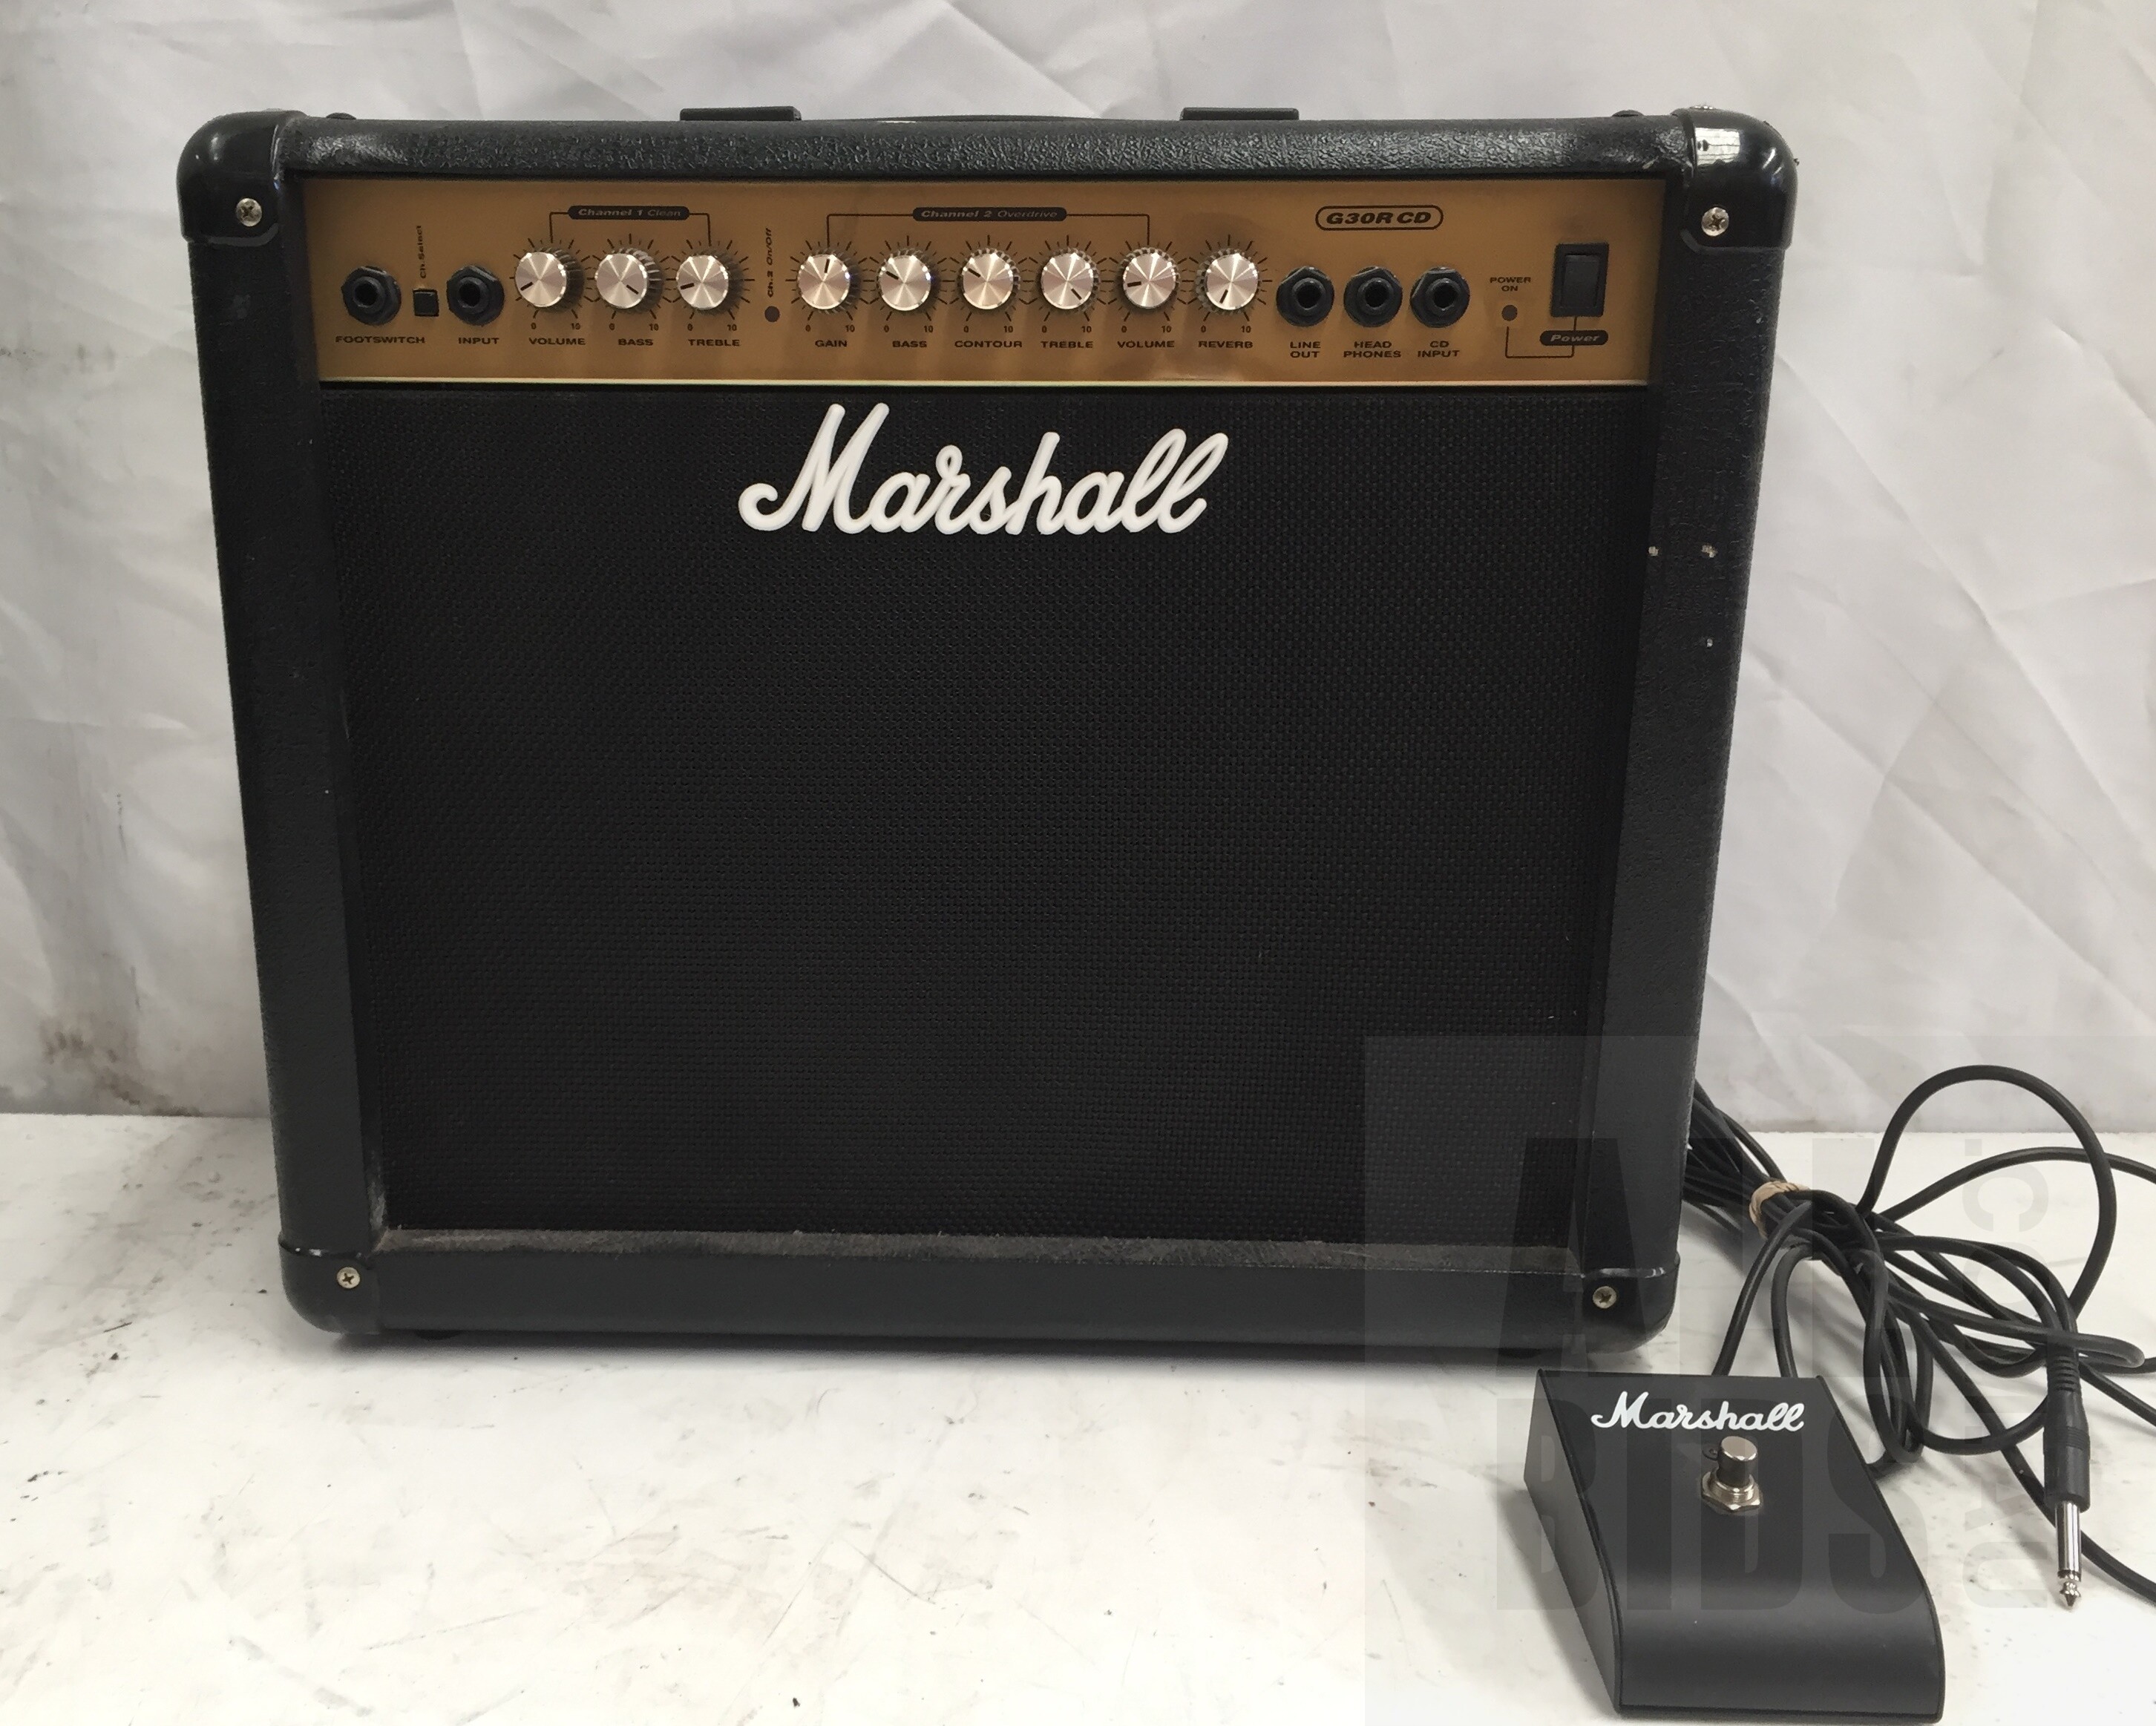 Marshall G30R CD Guitar Combo Amplifier - Lot 1300117 | ALLBIDS